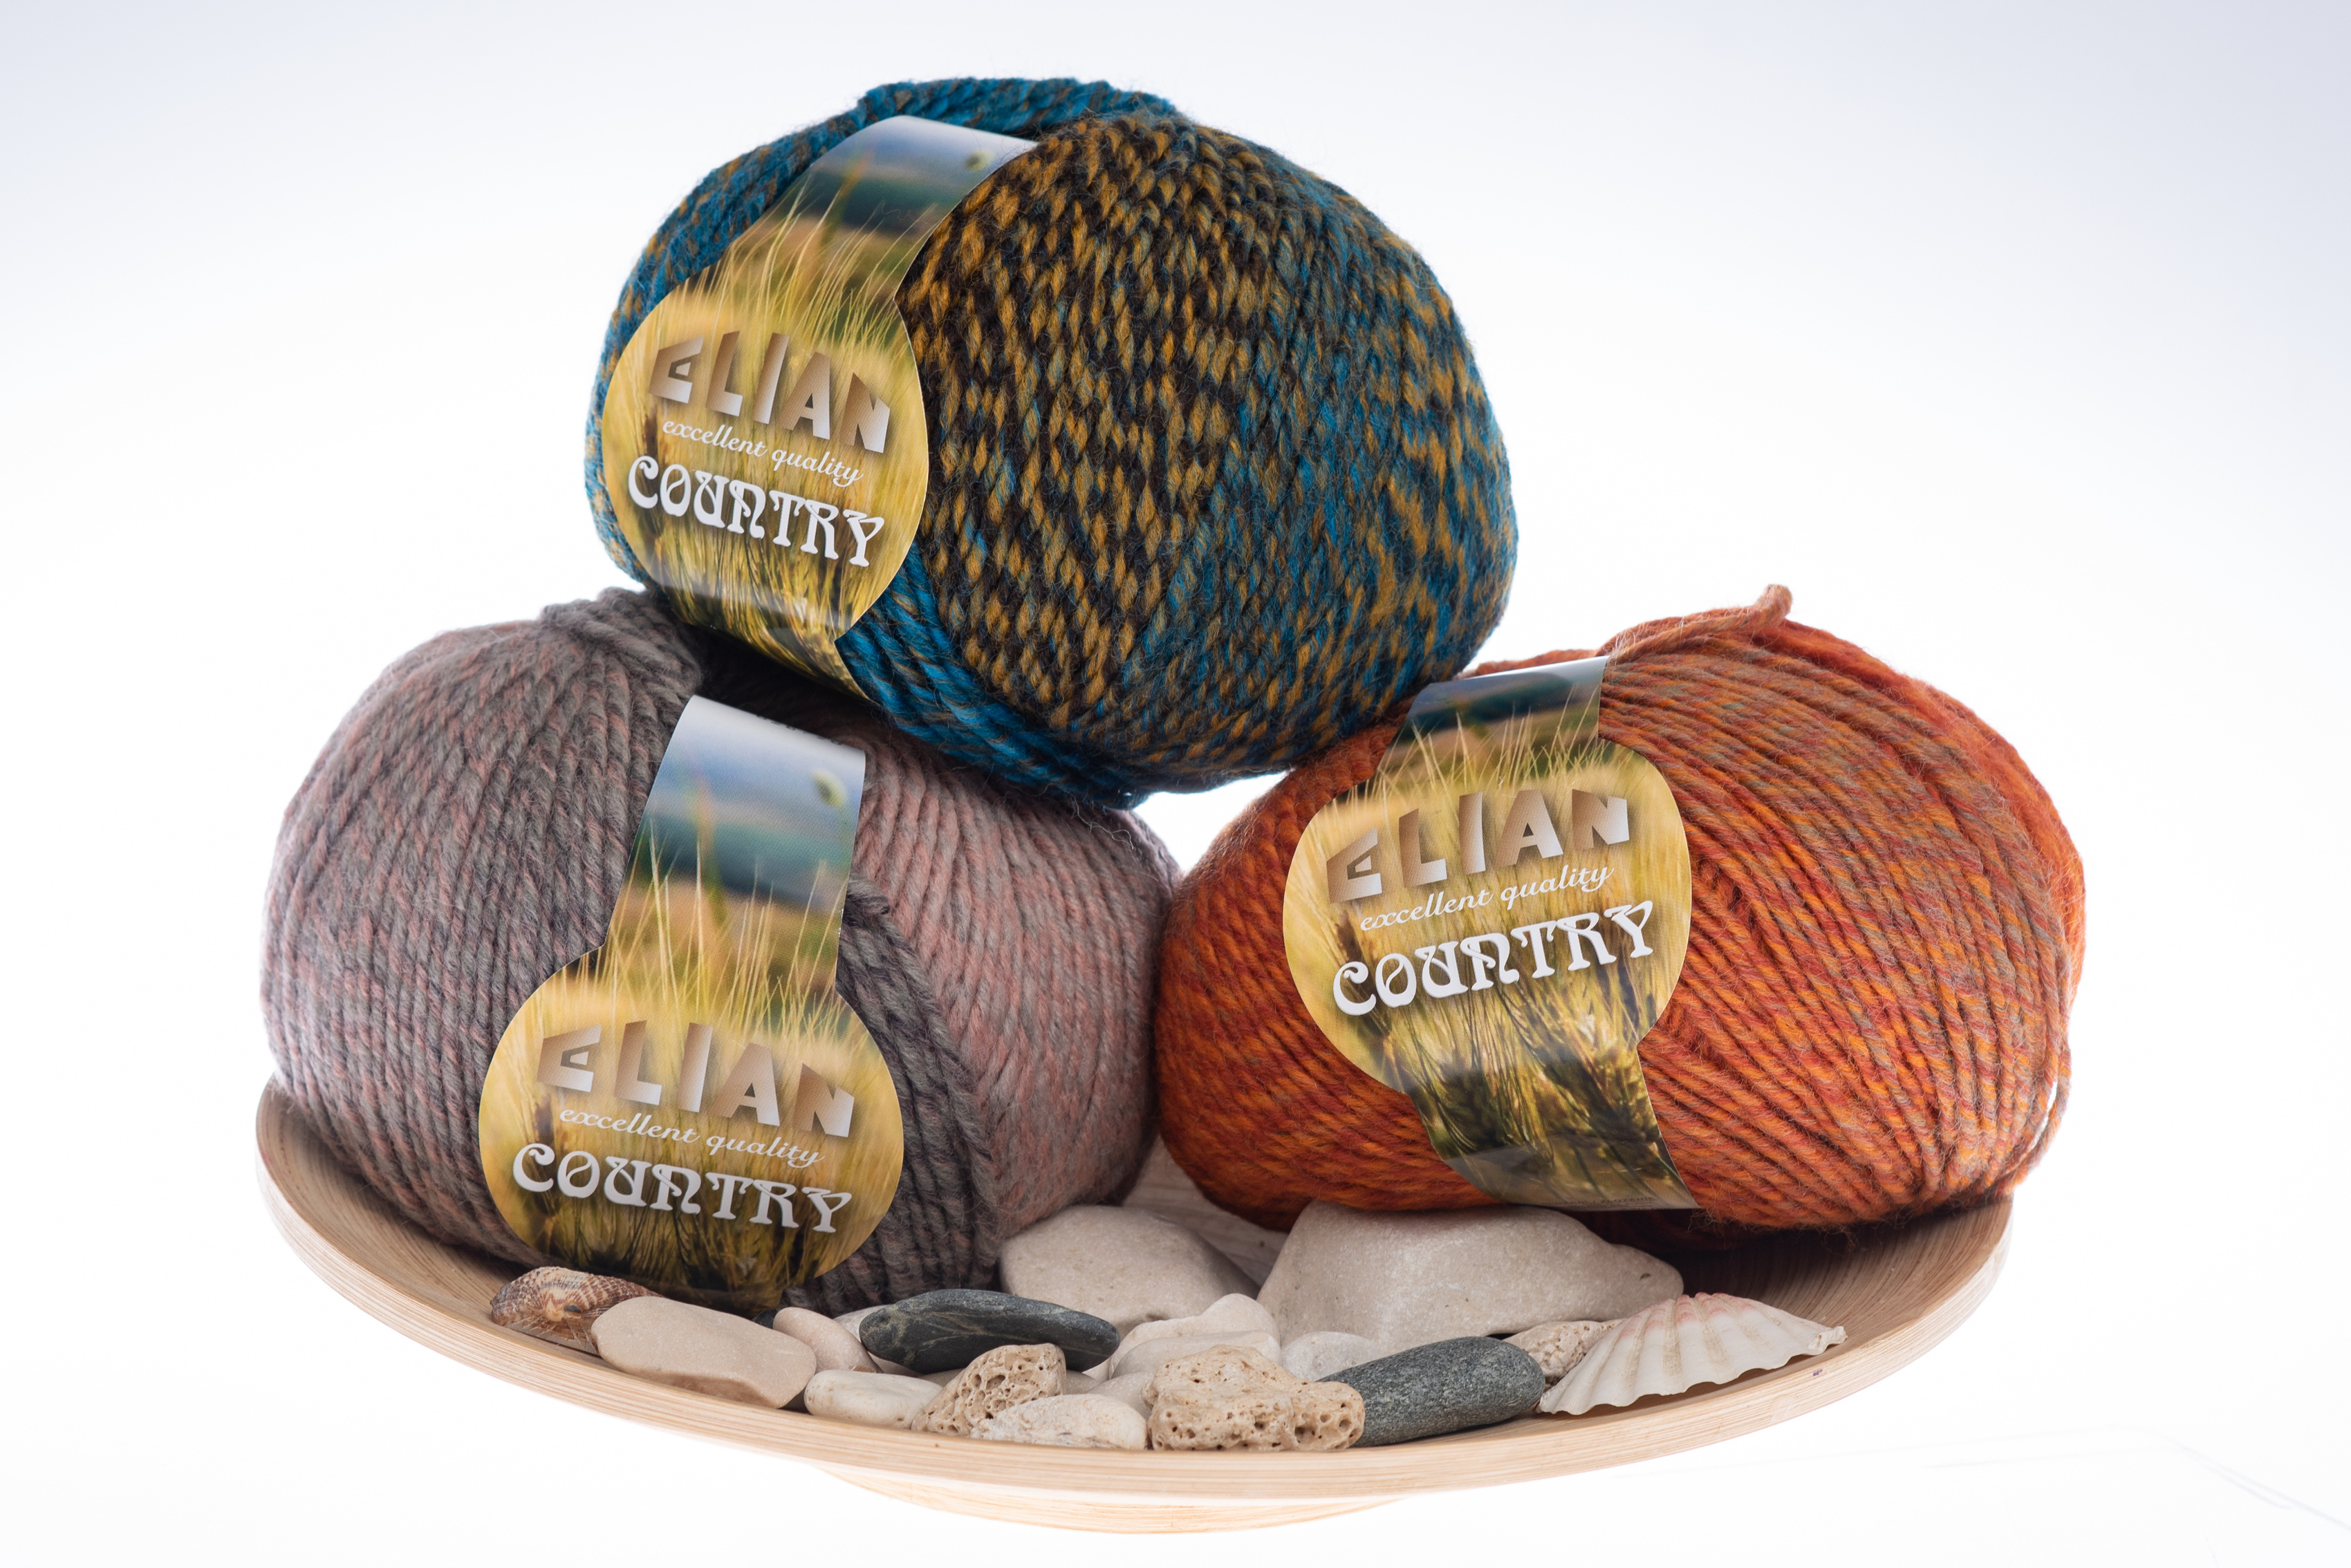 Wool yarn  Elian Country - Novelty